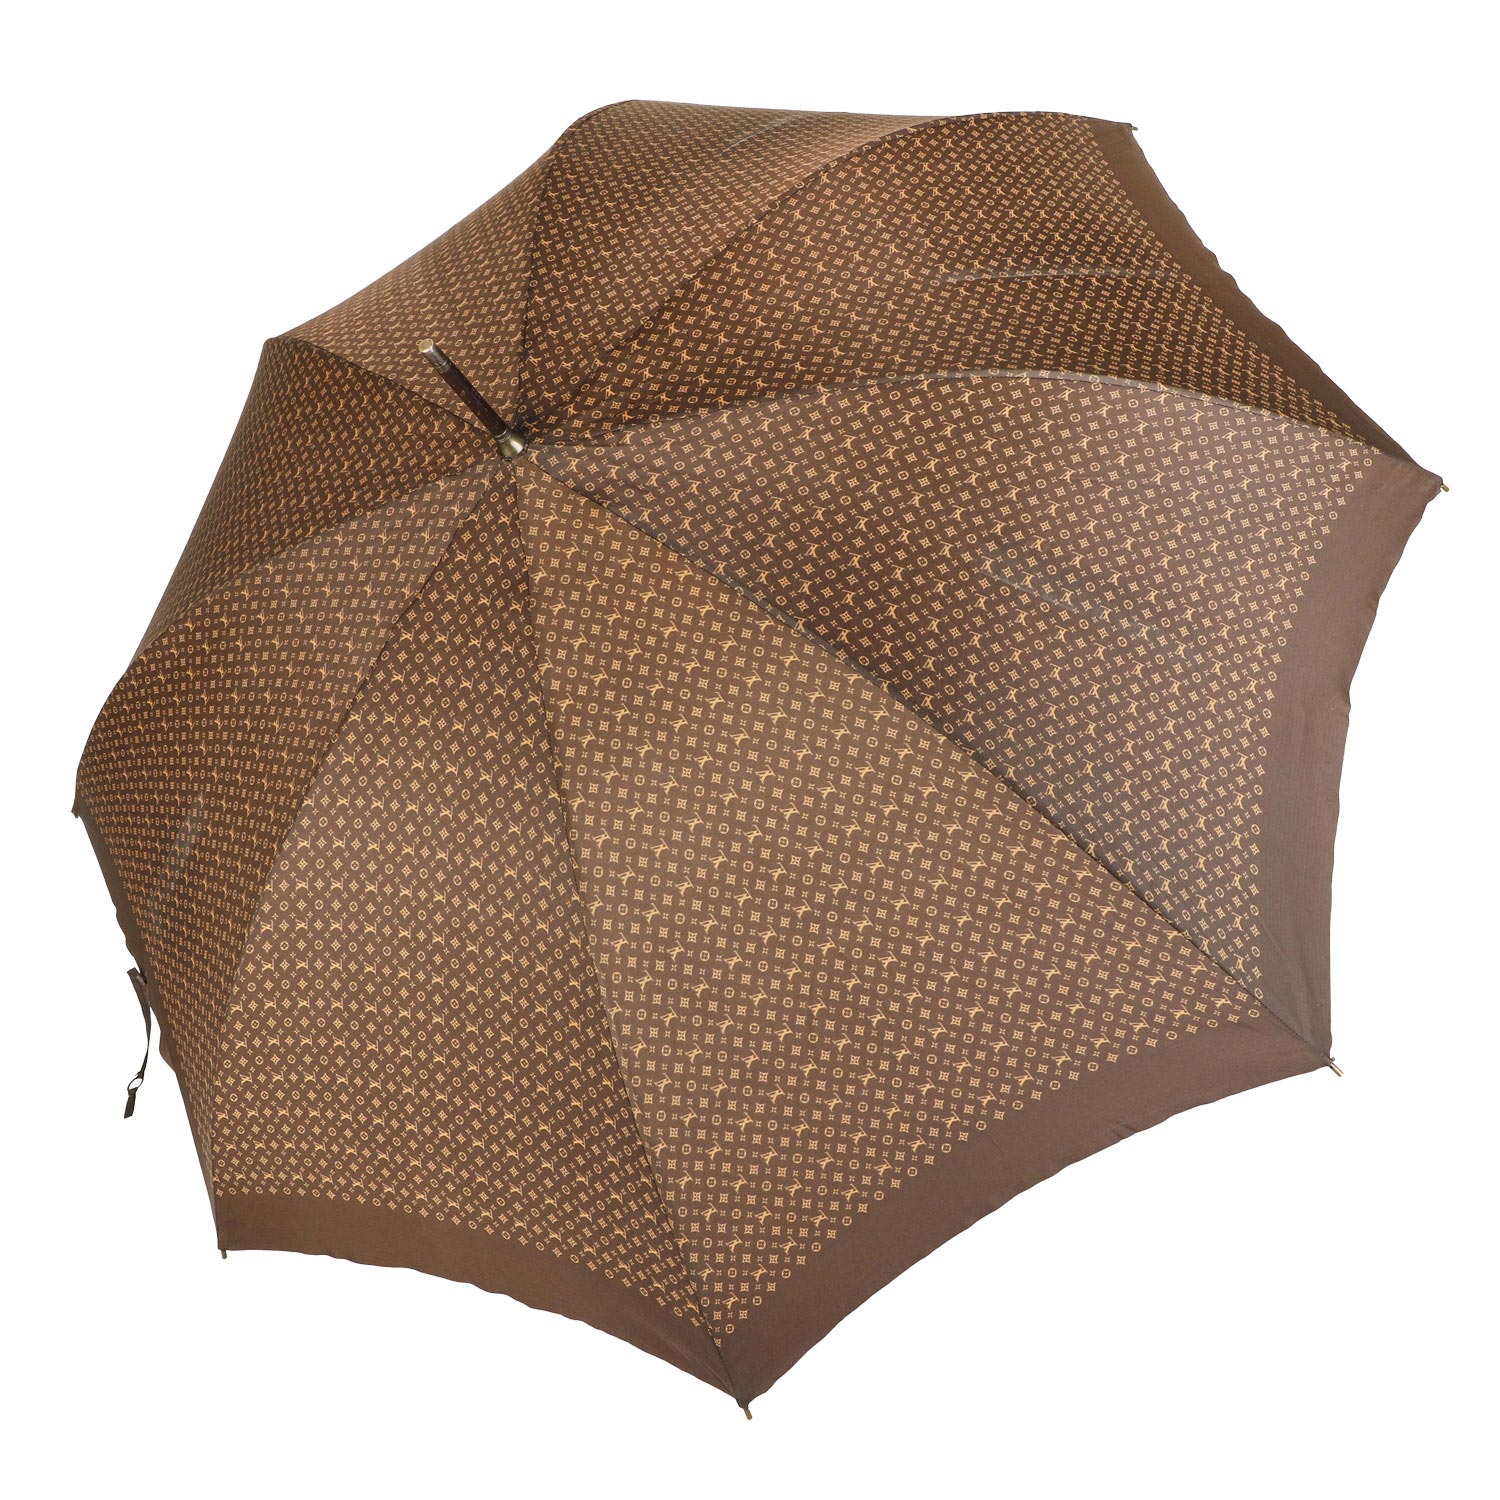 LOUIS VUITTON VINTAGE Regenschirm "PARAPLUIE MONOGRAM", Wohl 80er Jahre. - Image 4 of 4